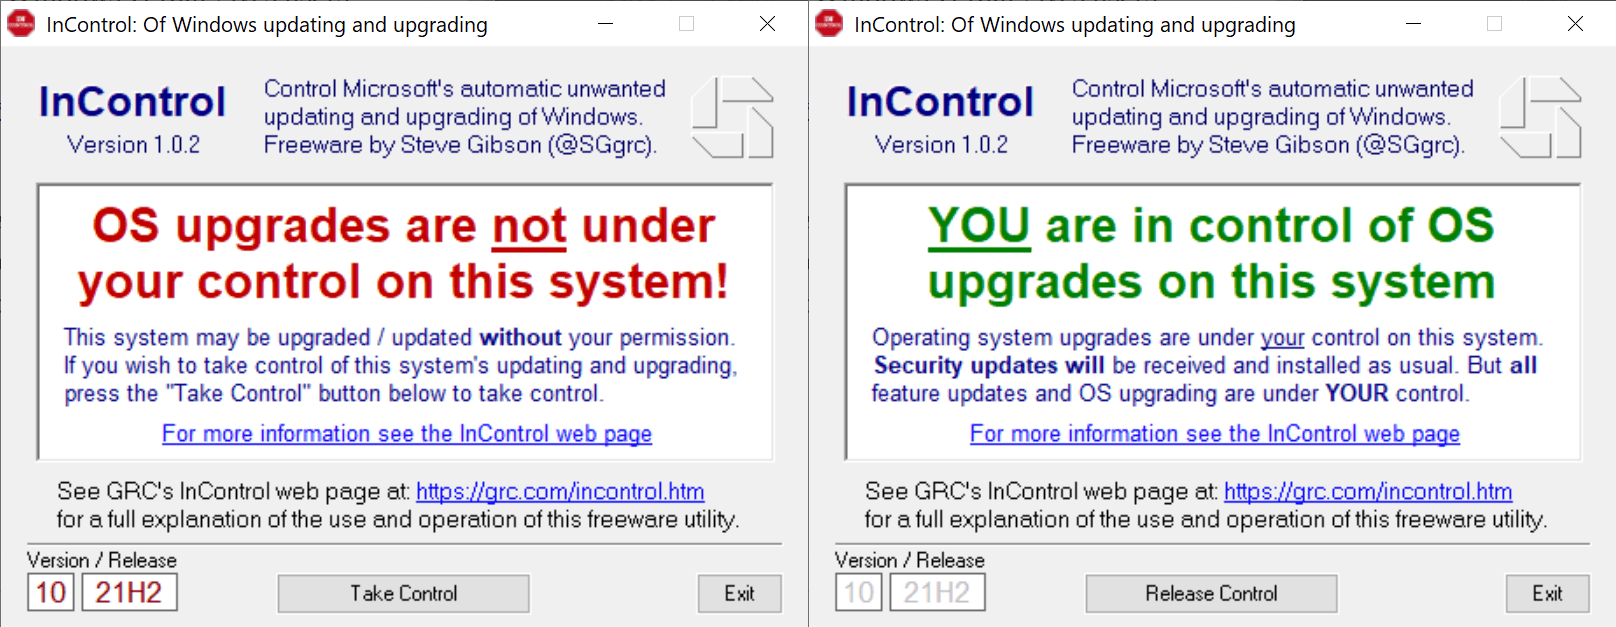 incontrol windows updates upgrades